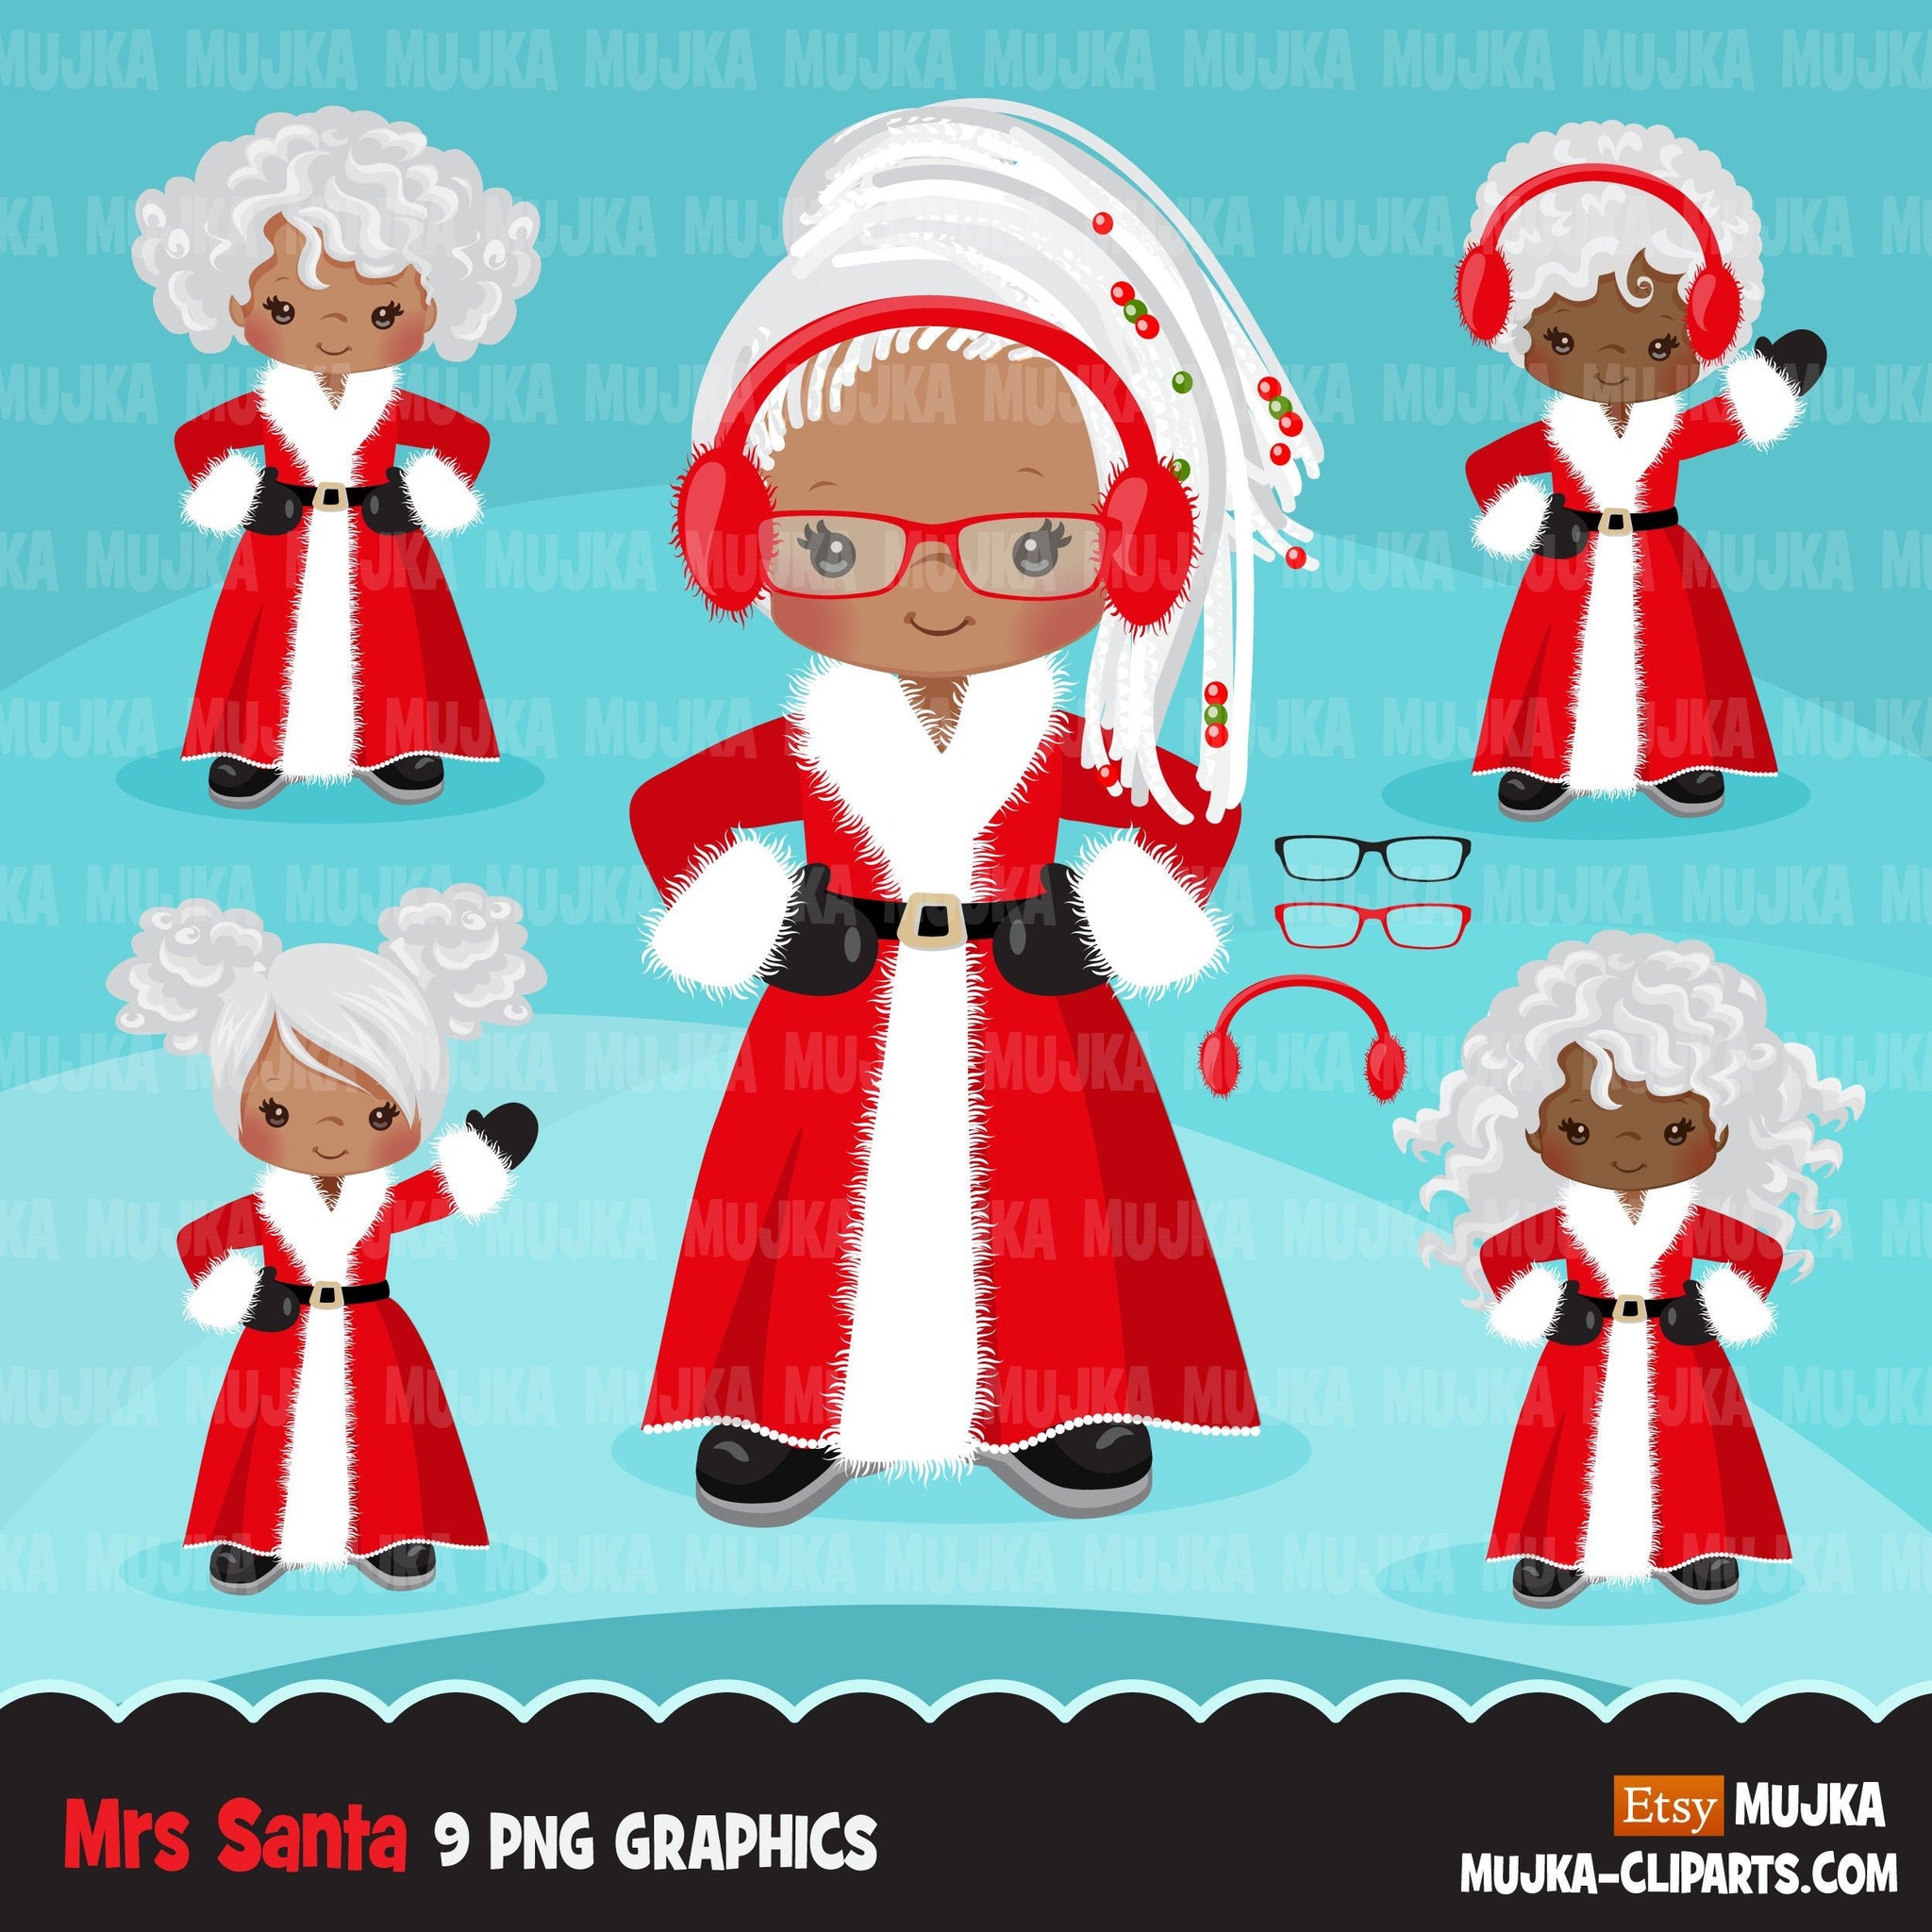 Black Mrs Santa Clipart, Christmas Graphics, Santa's wife, noel illustrations, scrapbooking, commercial use Holiday graphics